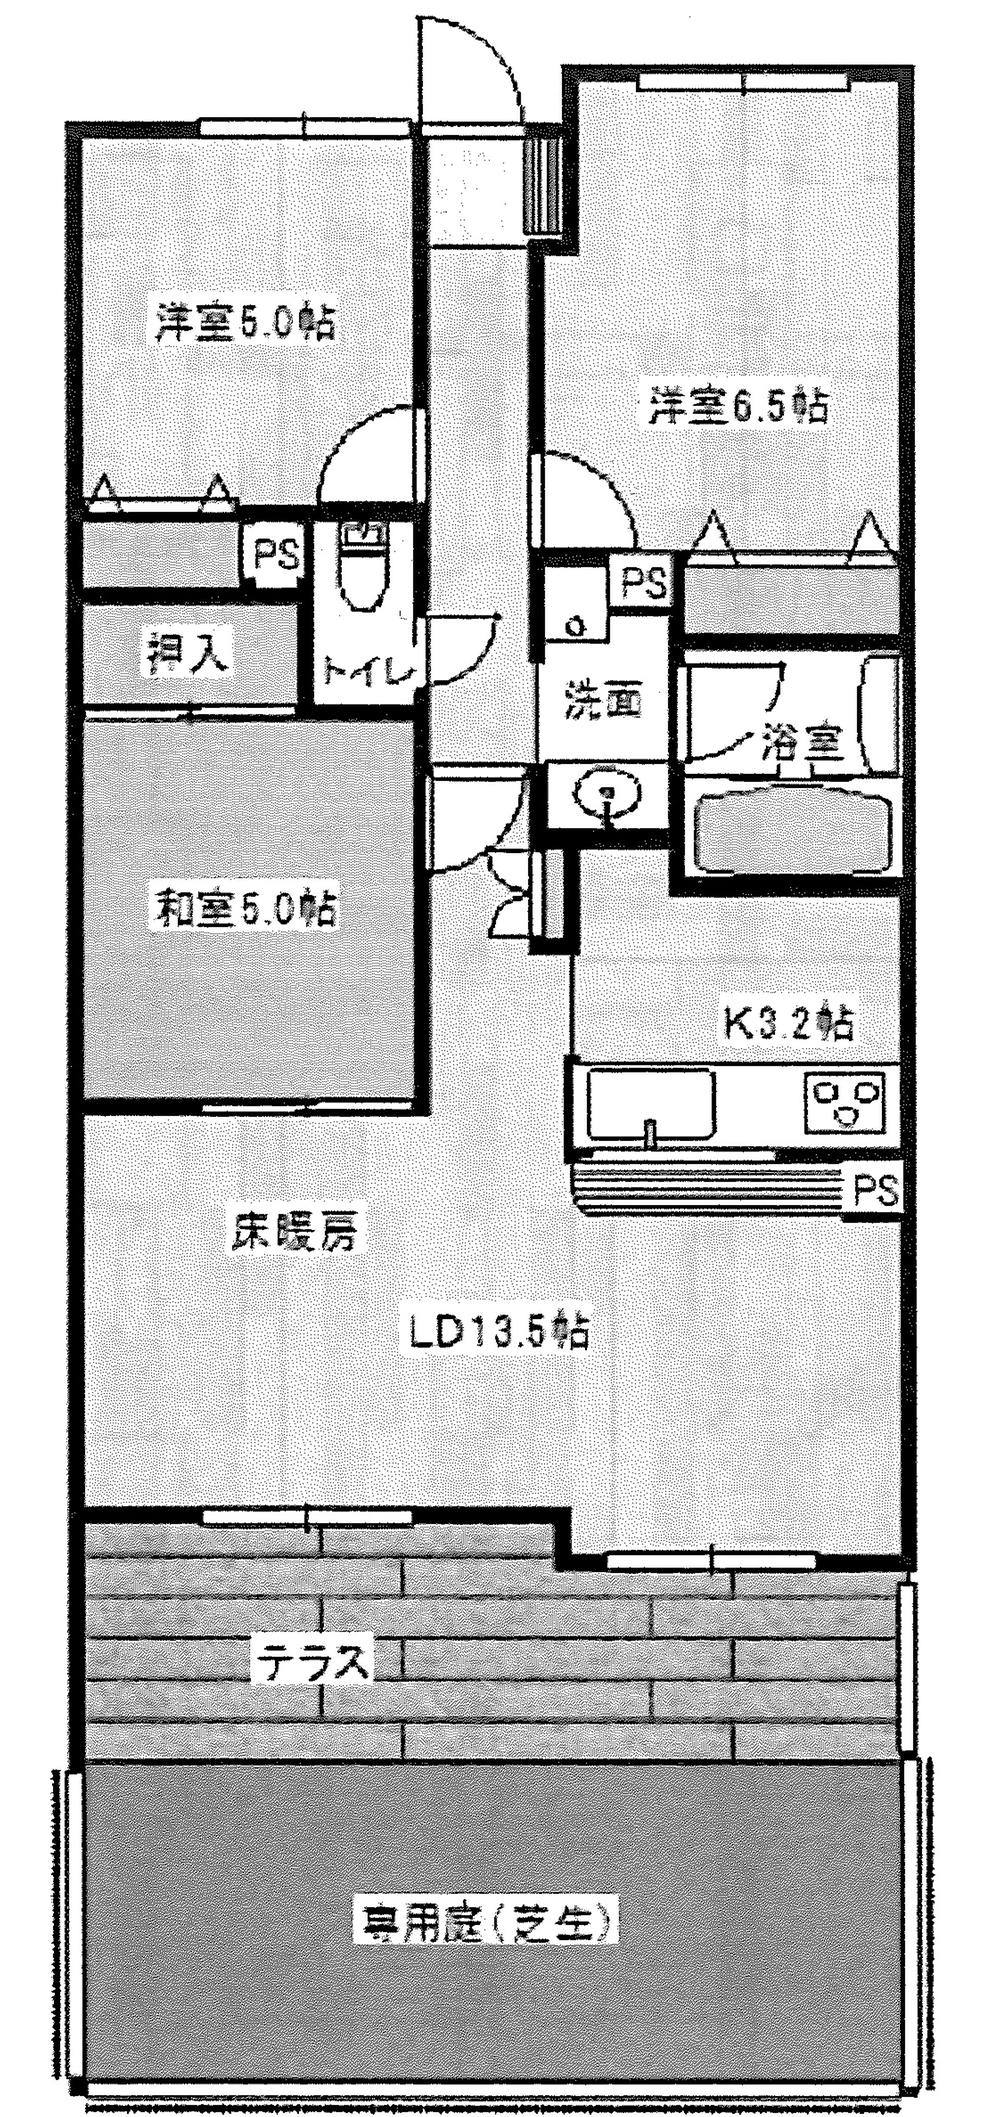 Floor plan. 3LDK, Price 16 million yen, Occupied area 70.81 sq m , Balcony area 10.82 sq m